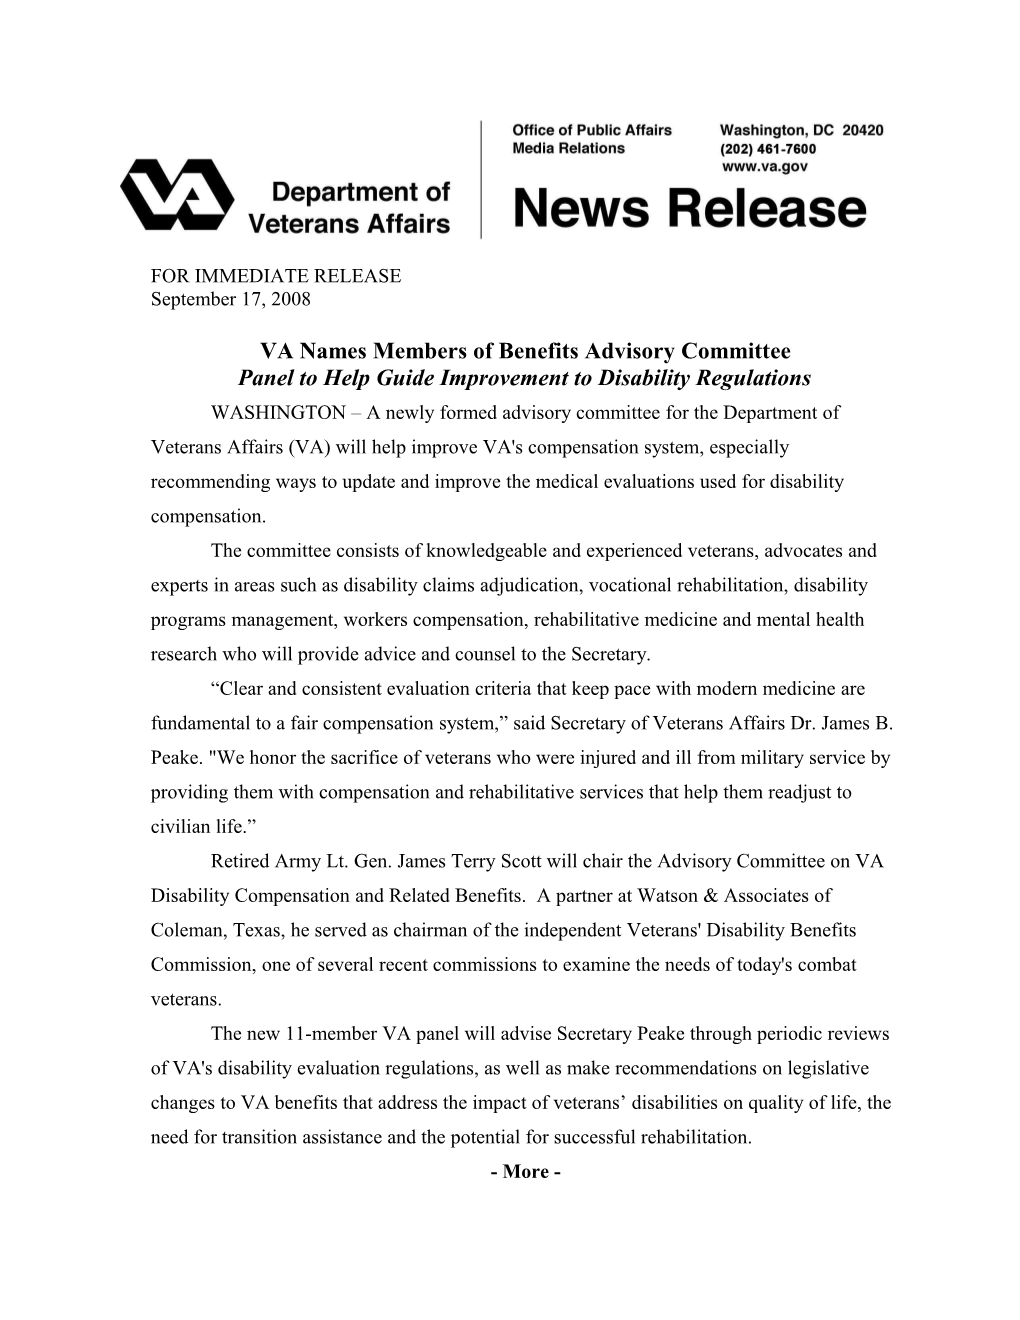 VA Names Members of Benefits Advisory Committee